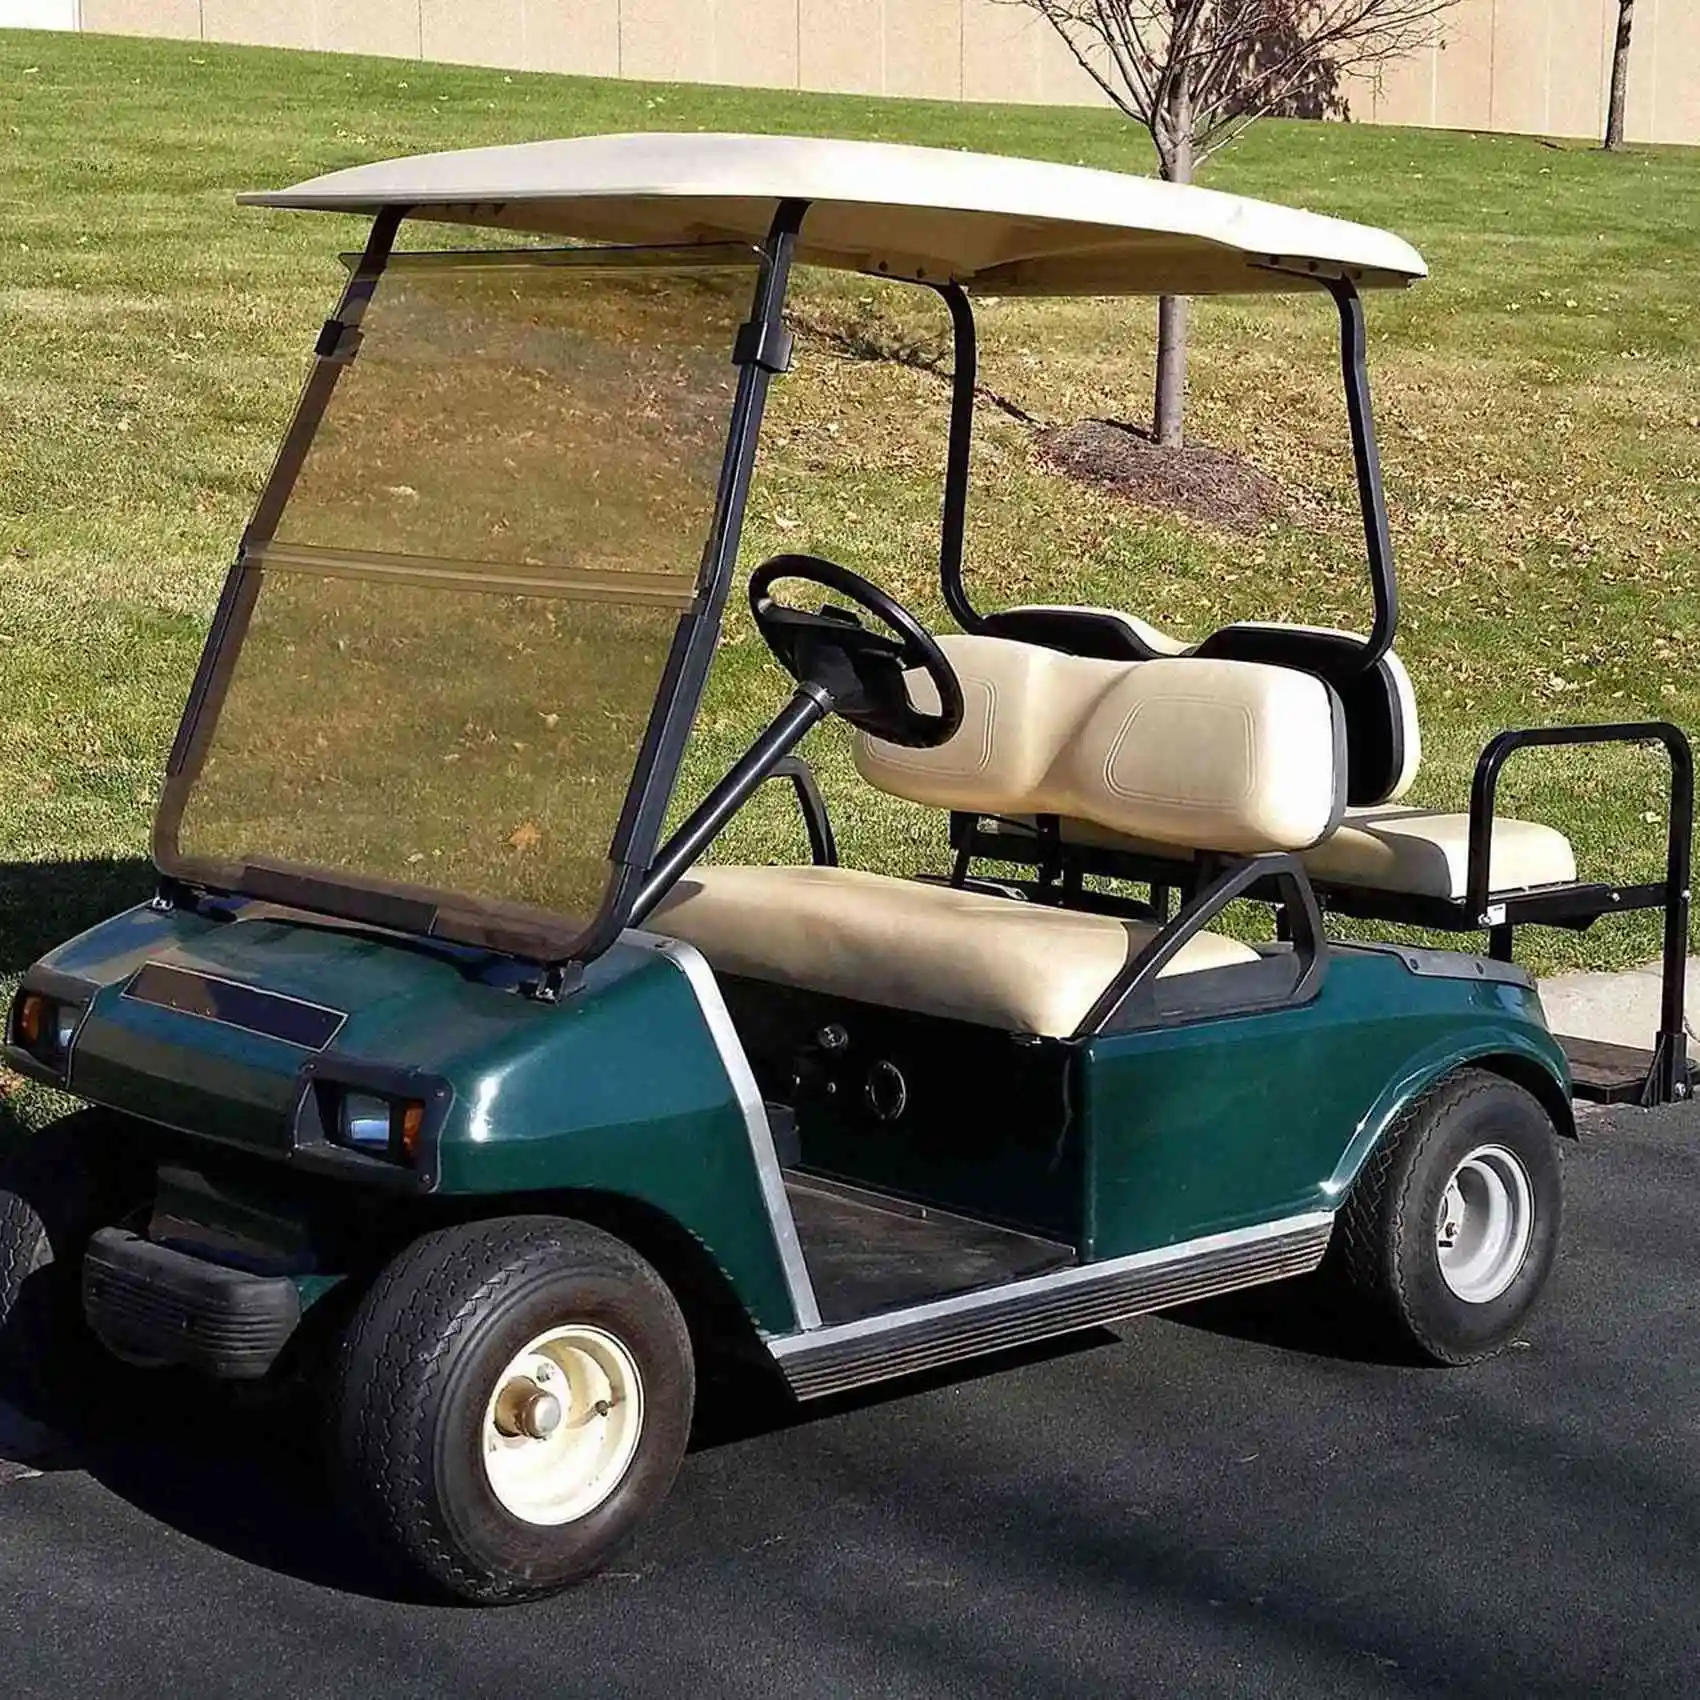 

Passenger & Driver Headlight Bezel for Golf Club Car DS 1993-Up (1016880 Left, 1016879 Right)